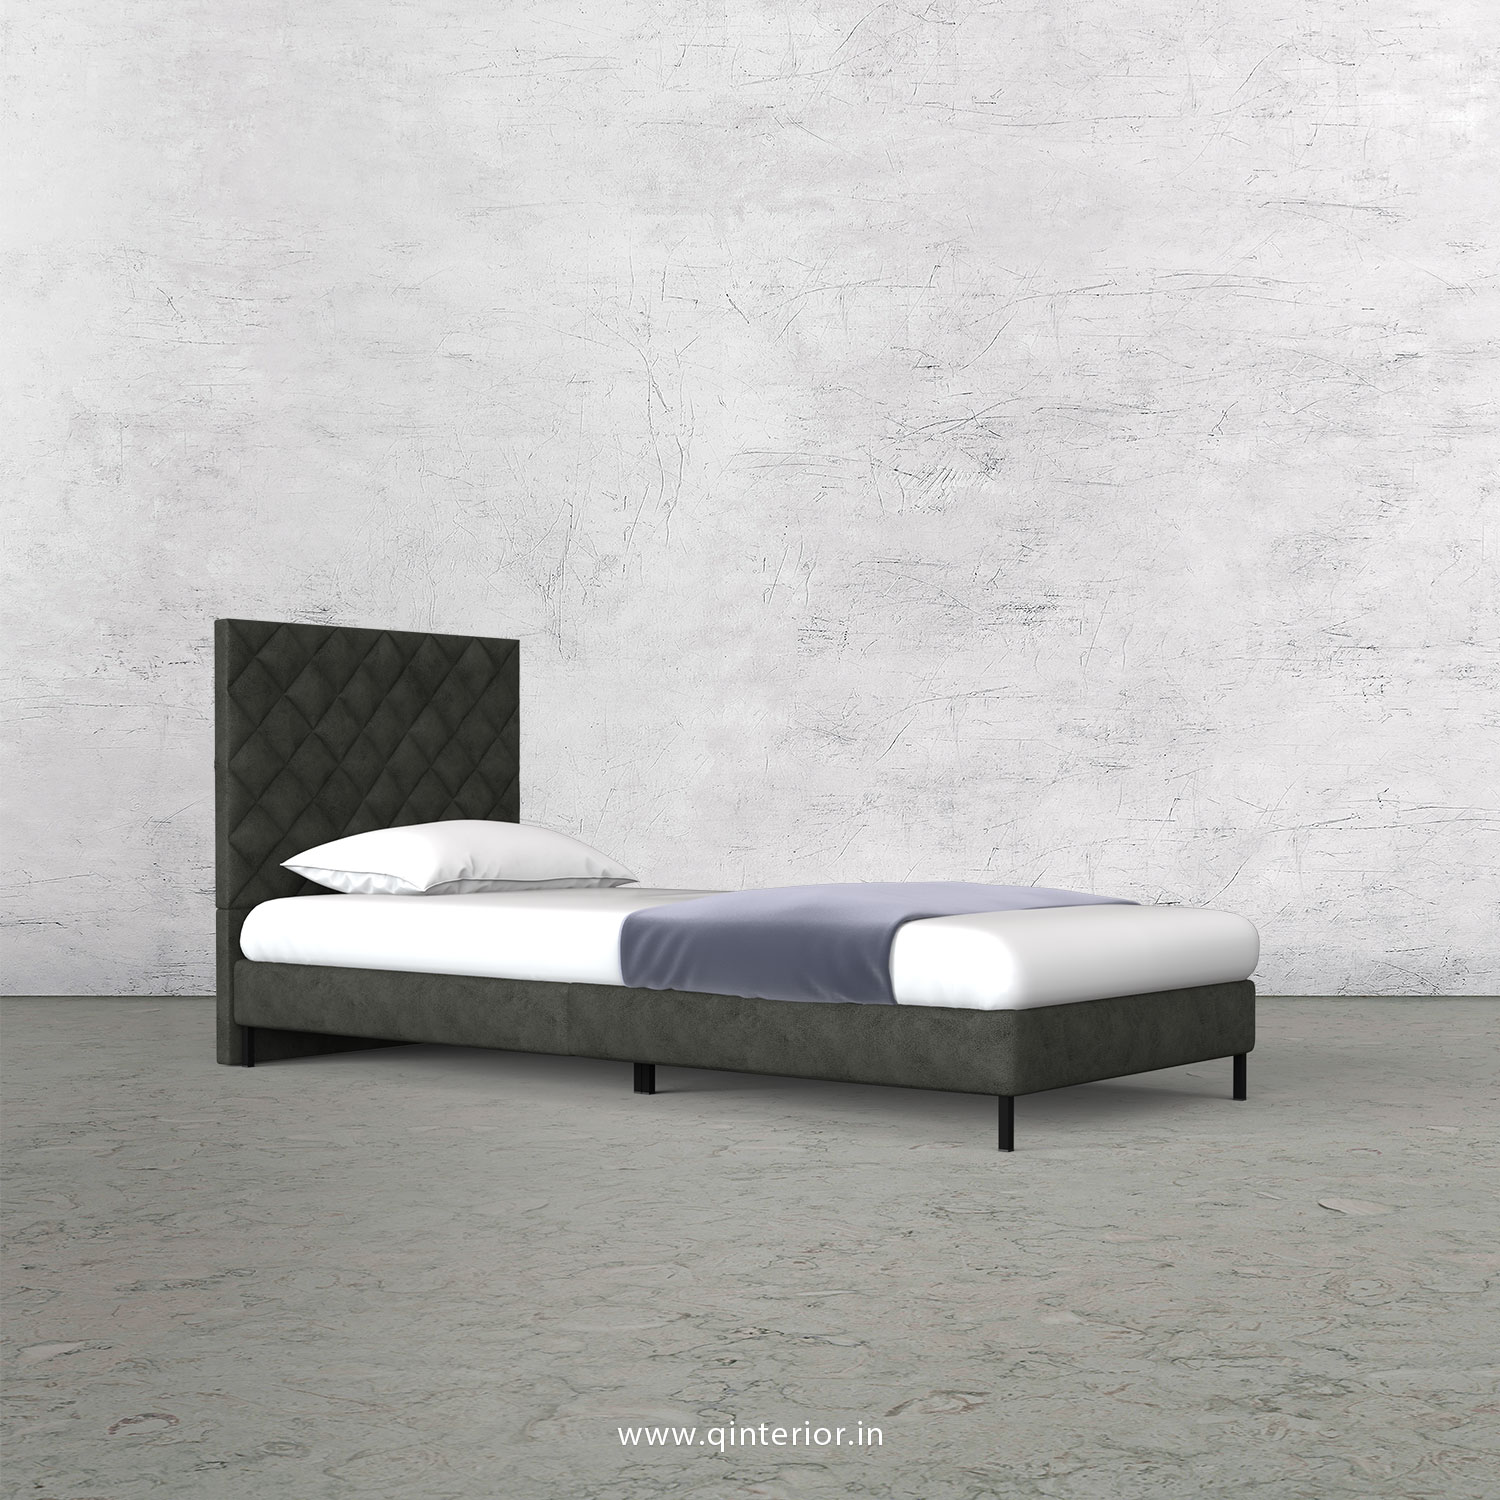 Aquila Single Bed in Fab Leather – SBD003 FL07